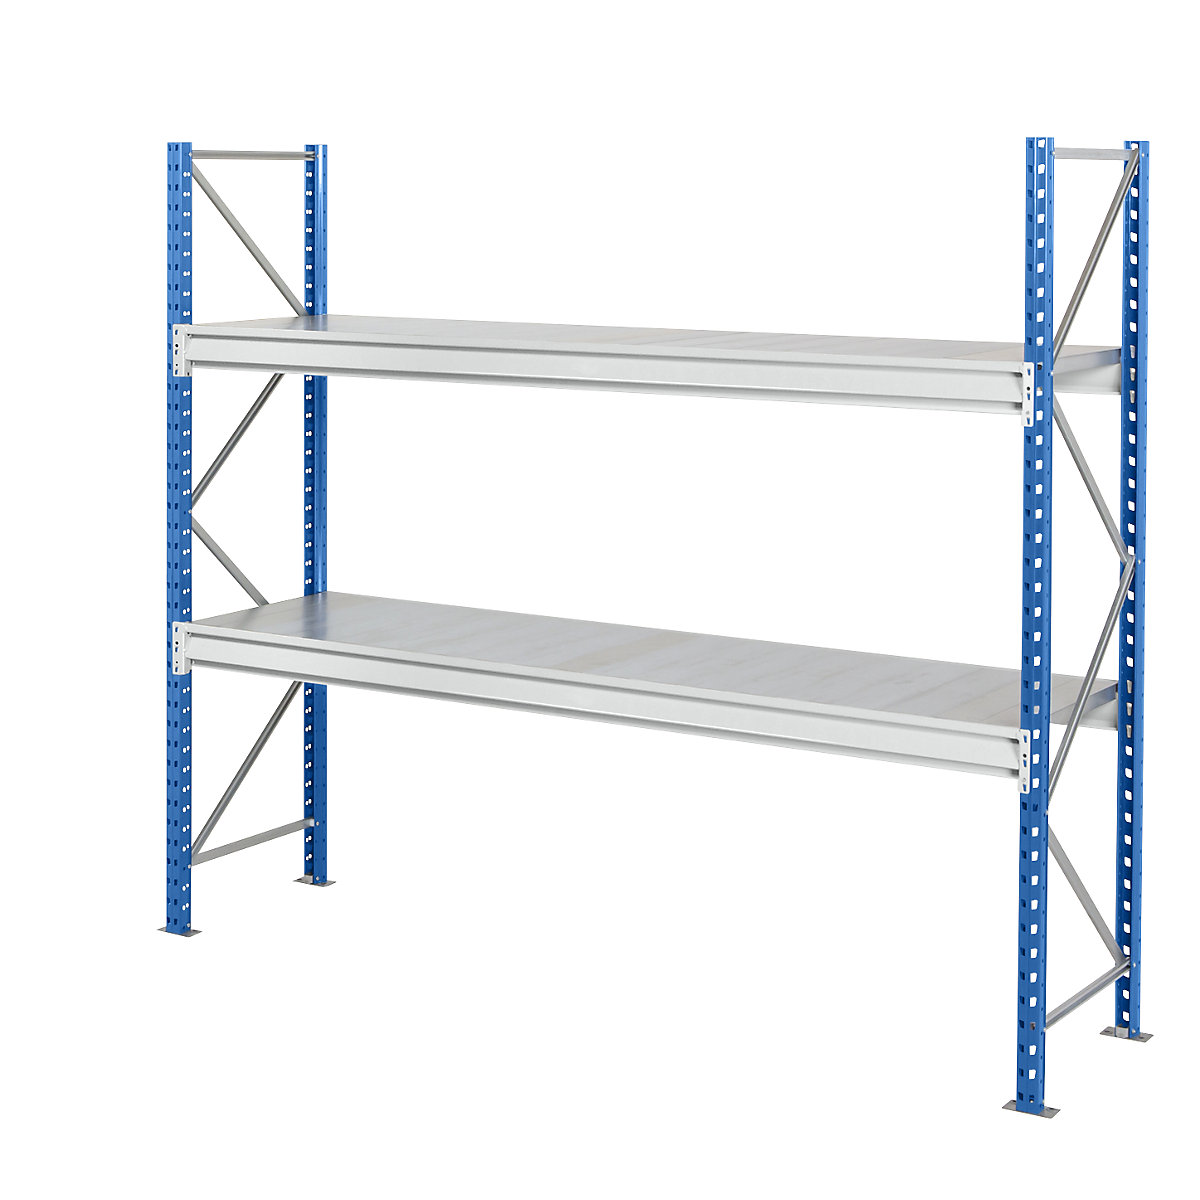 Heavy duty wide span shelving with steel shelf panels, frame colour blue, HxWxD 1996 x 2410 x 1000 mm, standard shelf unit-9